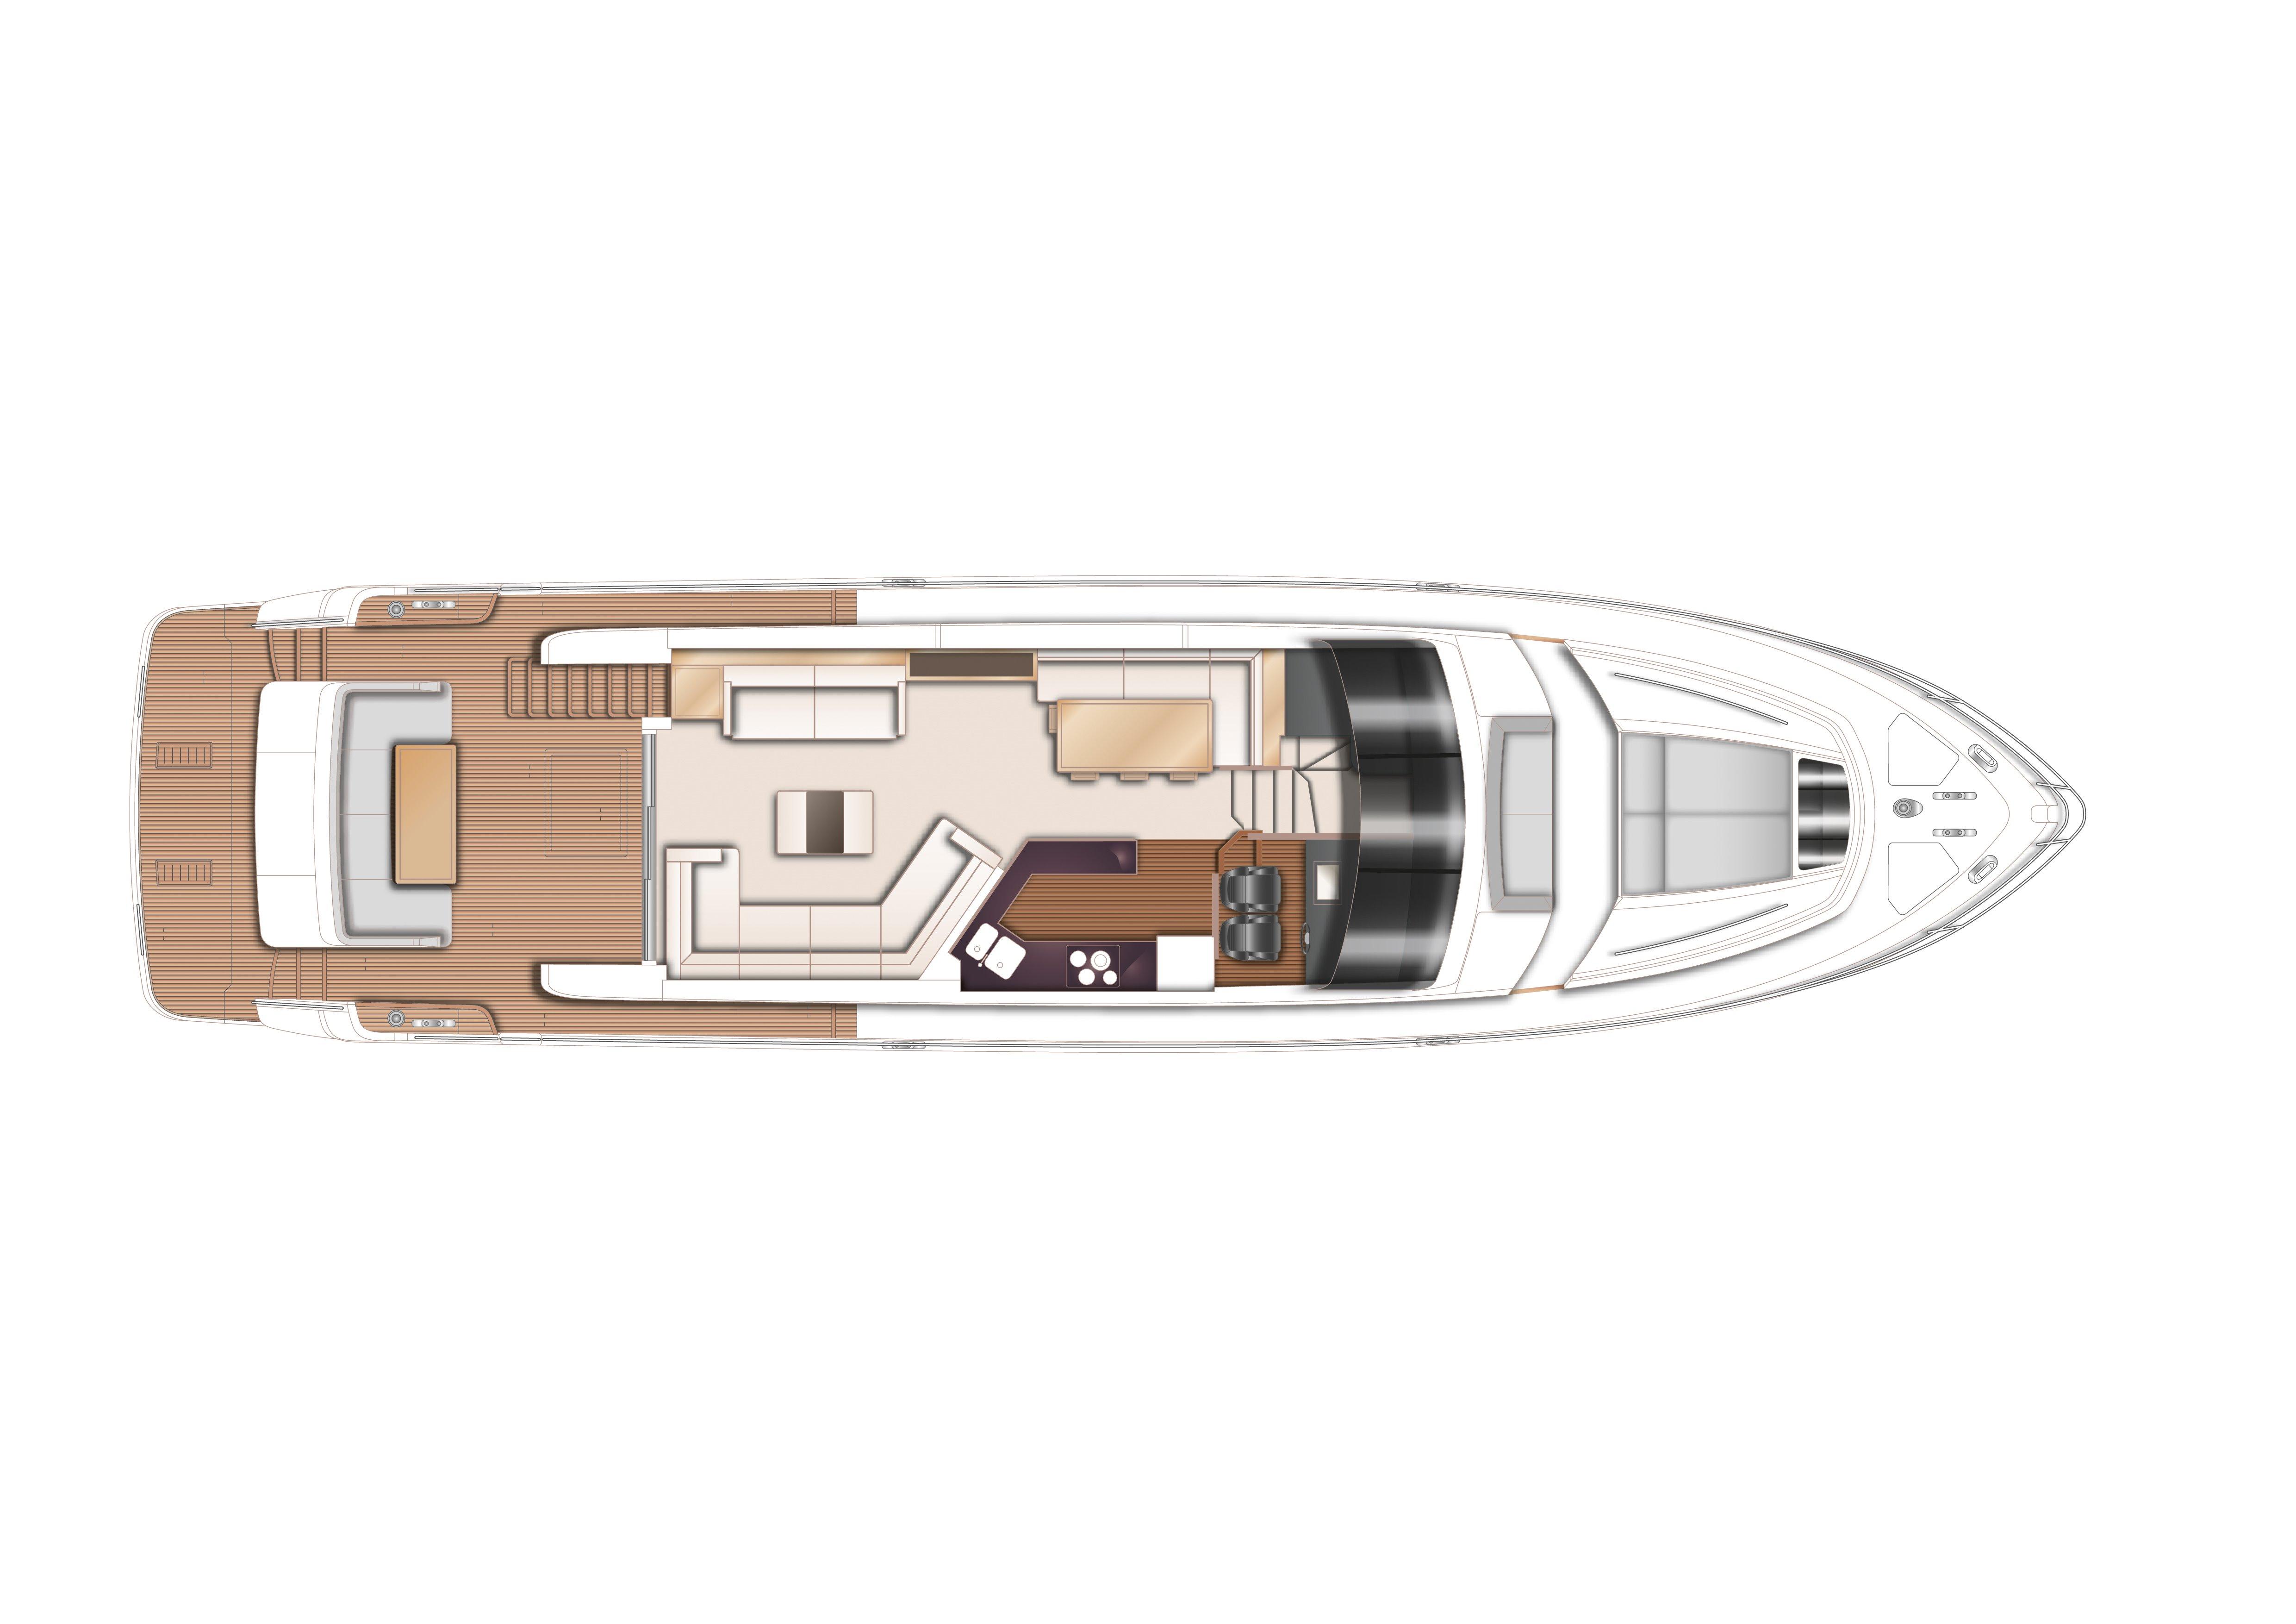 Manufacturer Provided Image: Princess Flybridge 72 Motor Yacht Upper Deck Layout Plan